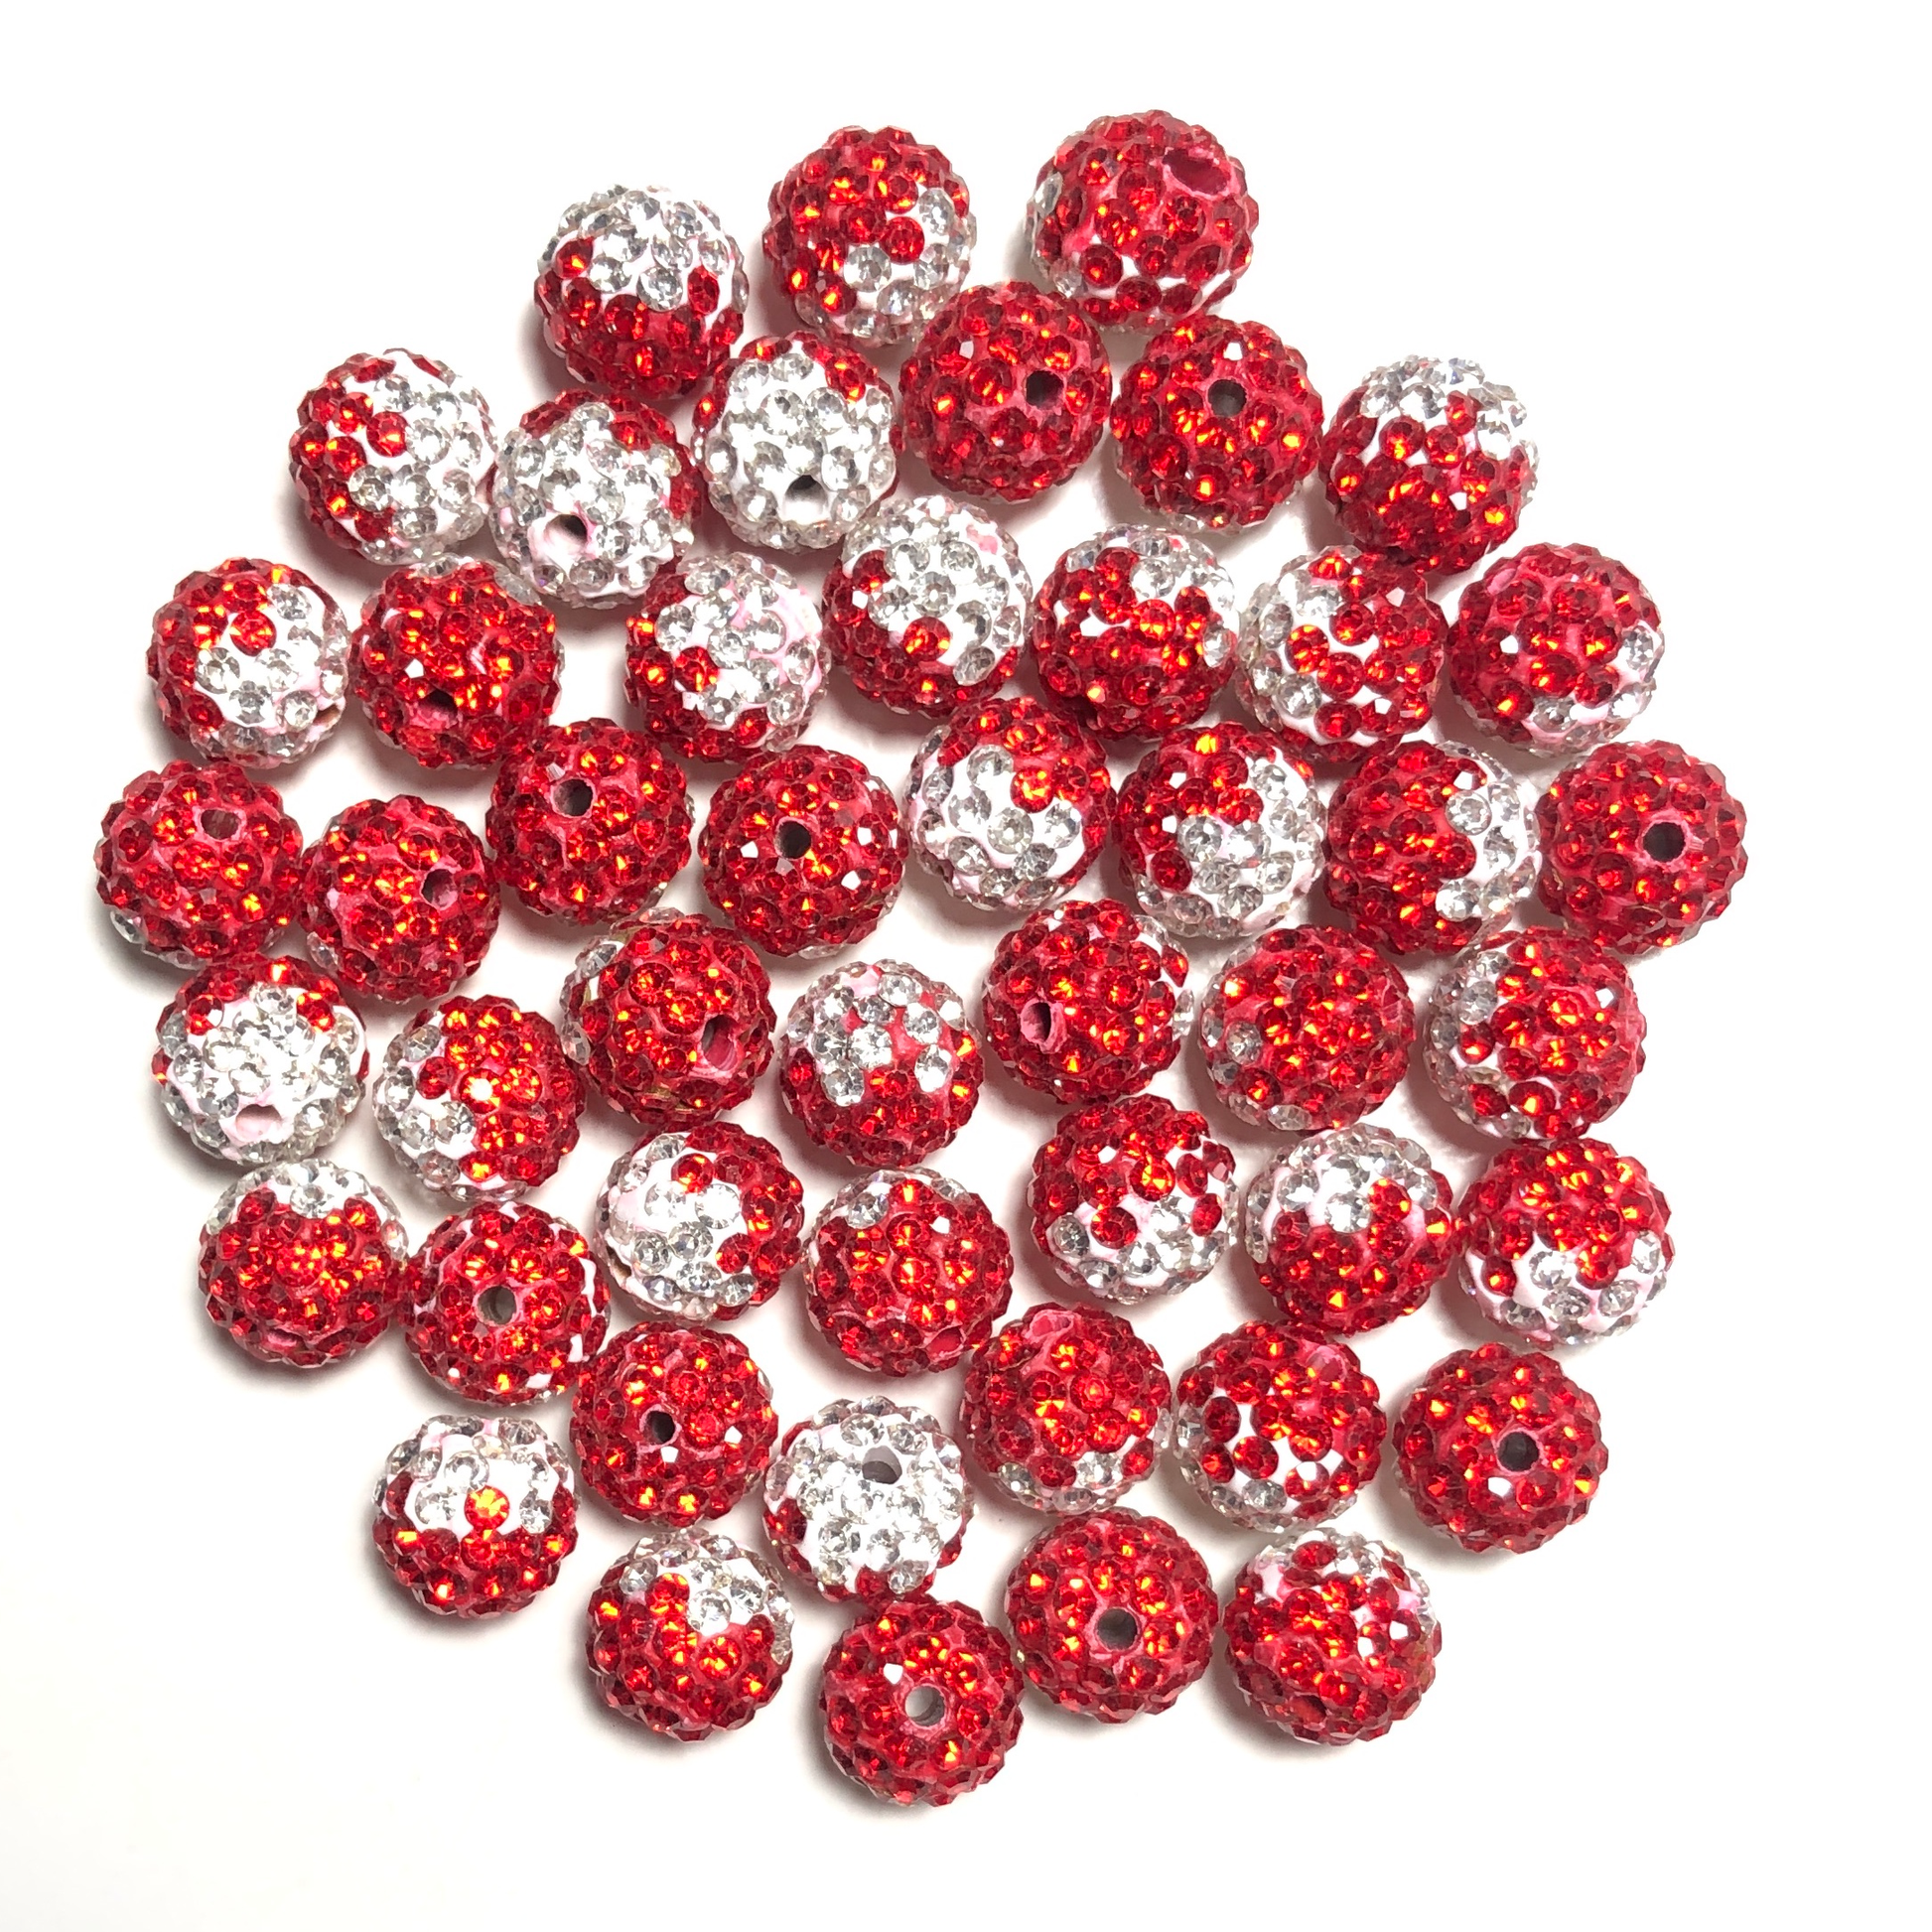 50-100pcs/lot 10mm White & Red Rhinestone Clay Disco Ball Beads, Clay Beads